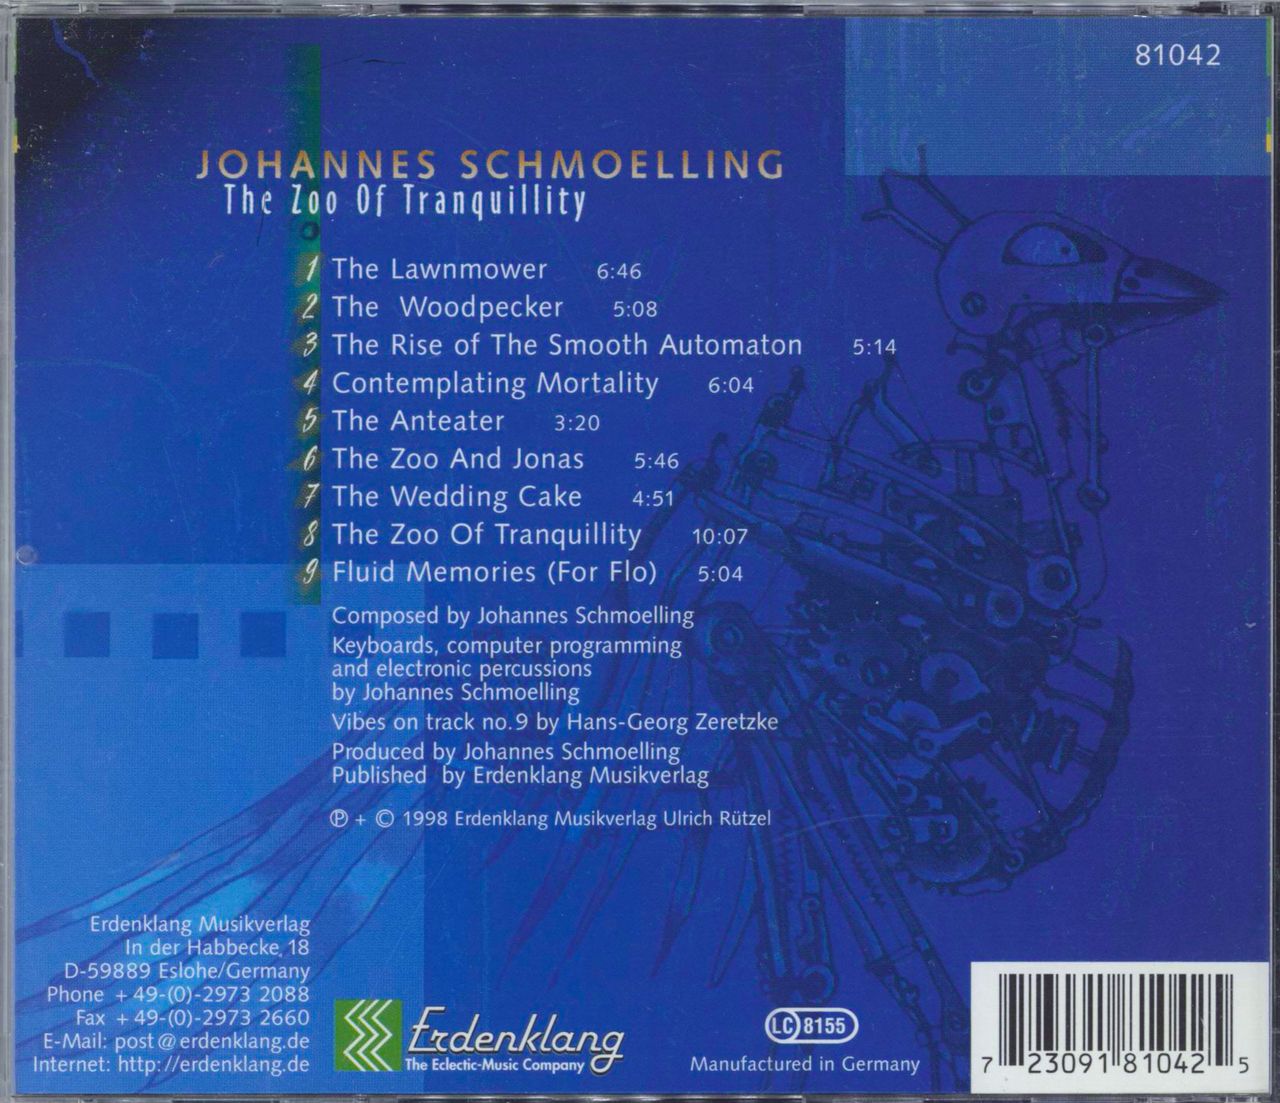 Johannes Schmoelling The Zoo Of Tranquillity German CD album (CDLP) 723091810425